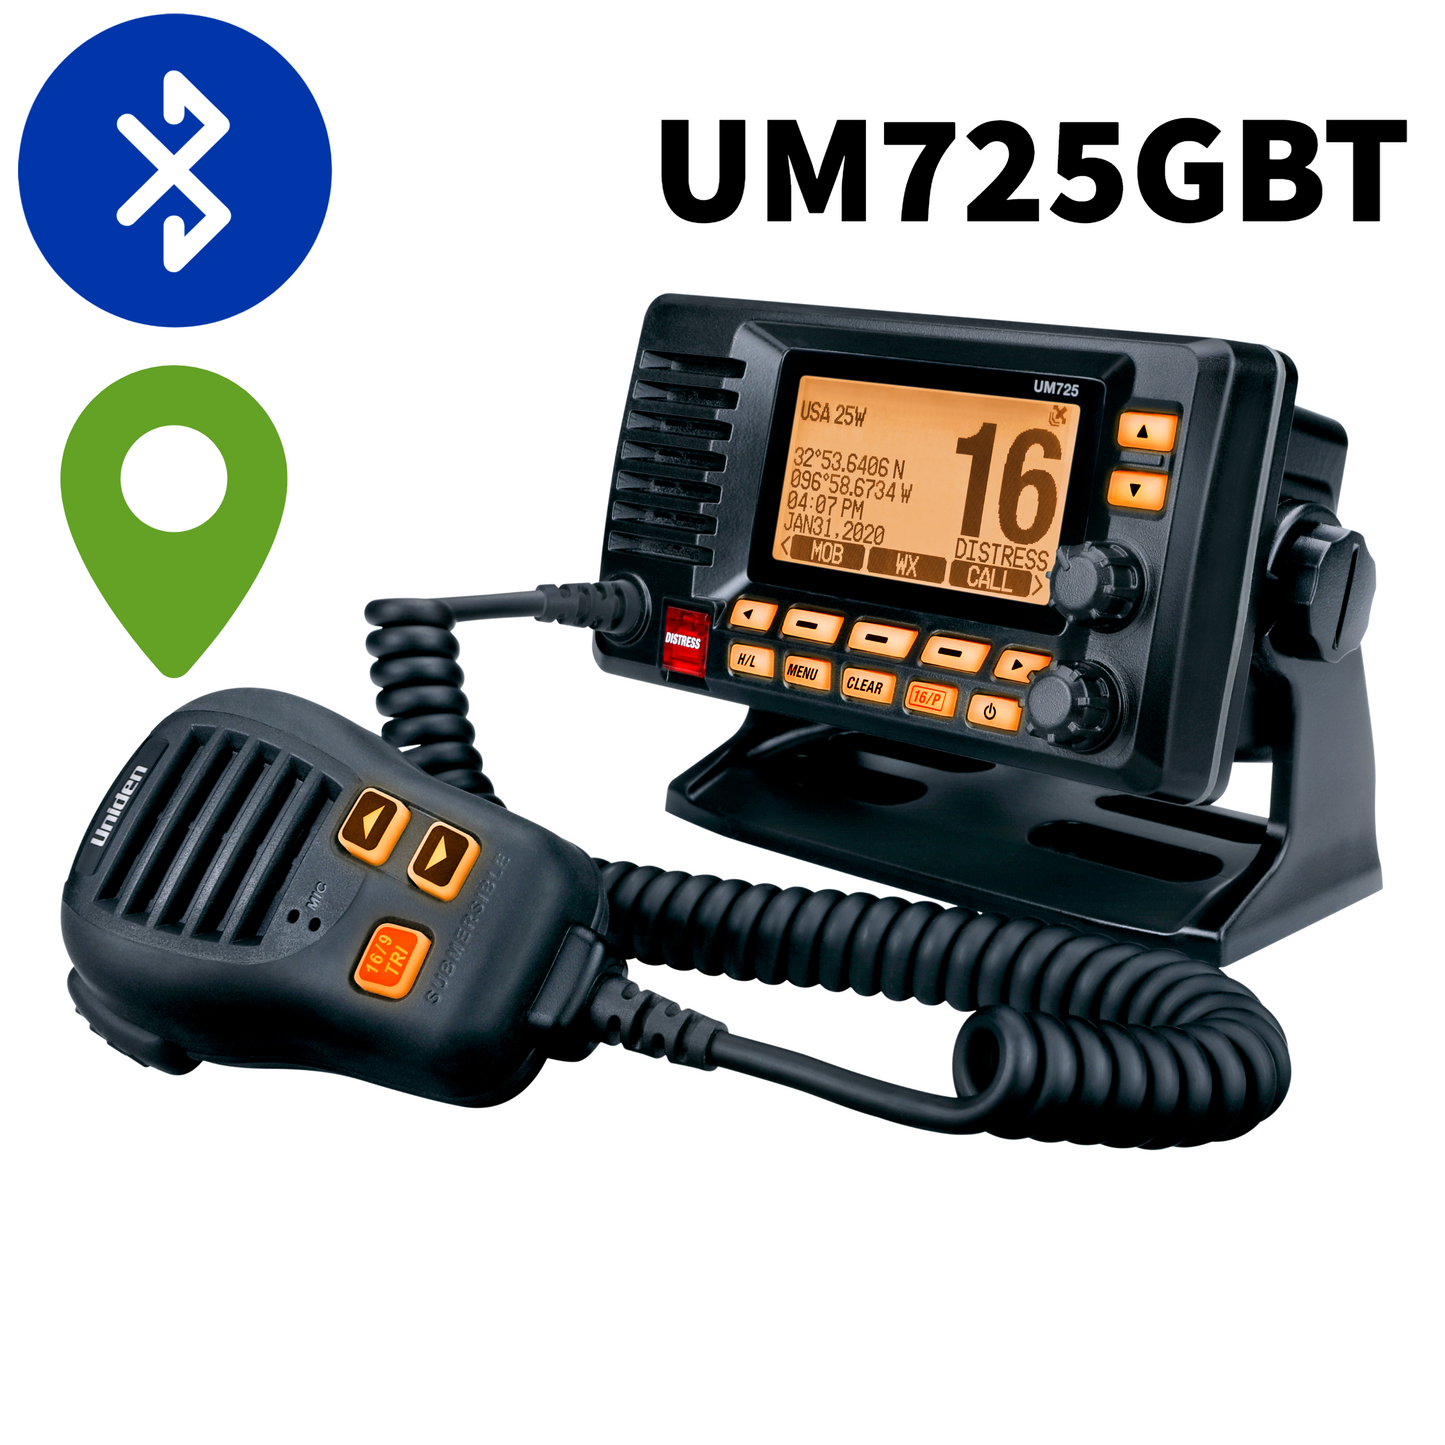 UM725 Marine Radio